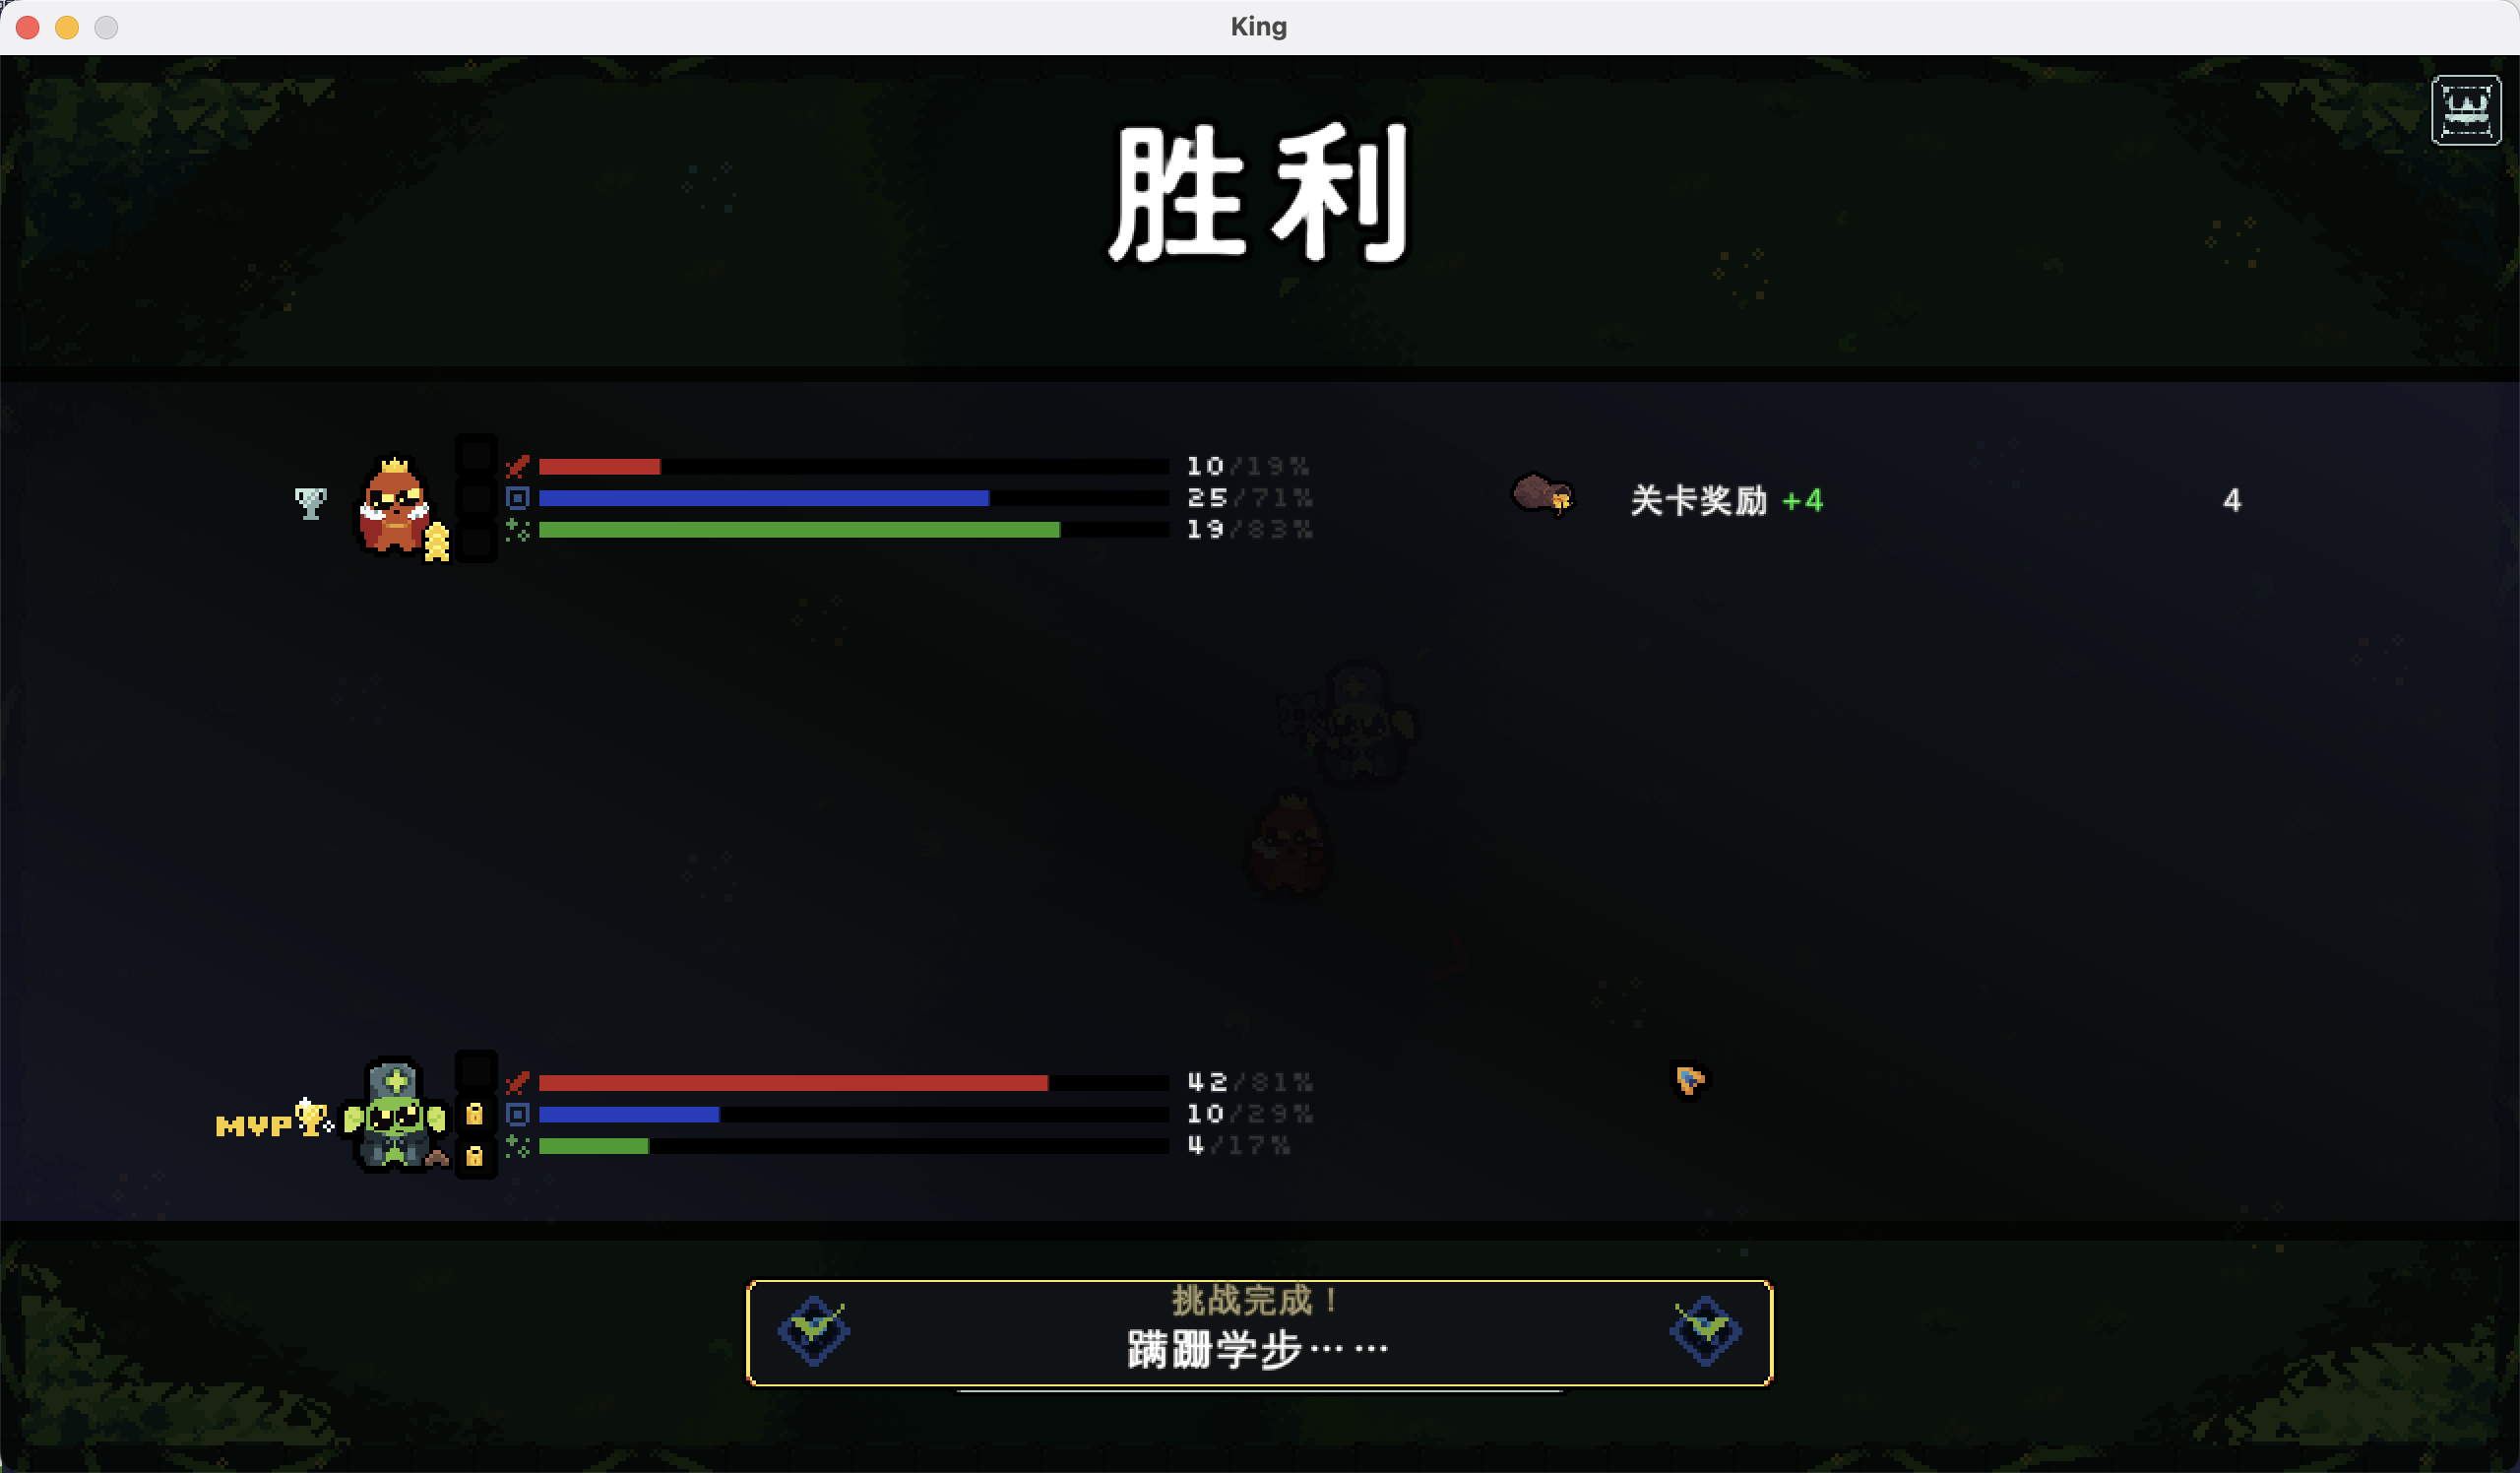 吾王保卫战 for Mac v0.5.3 Just King 中文移植版 苹果电脑